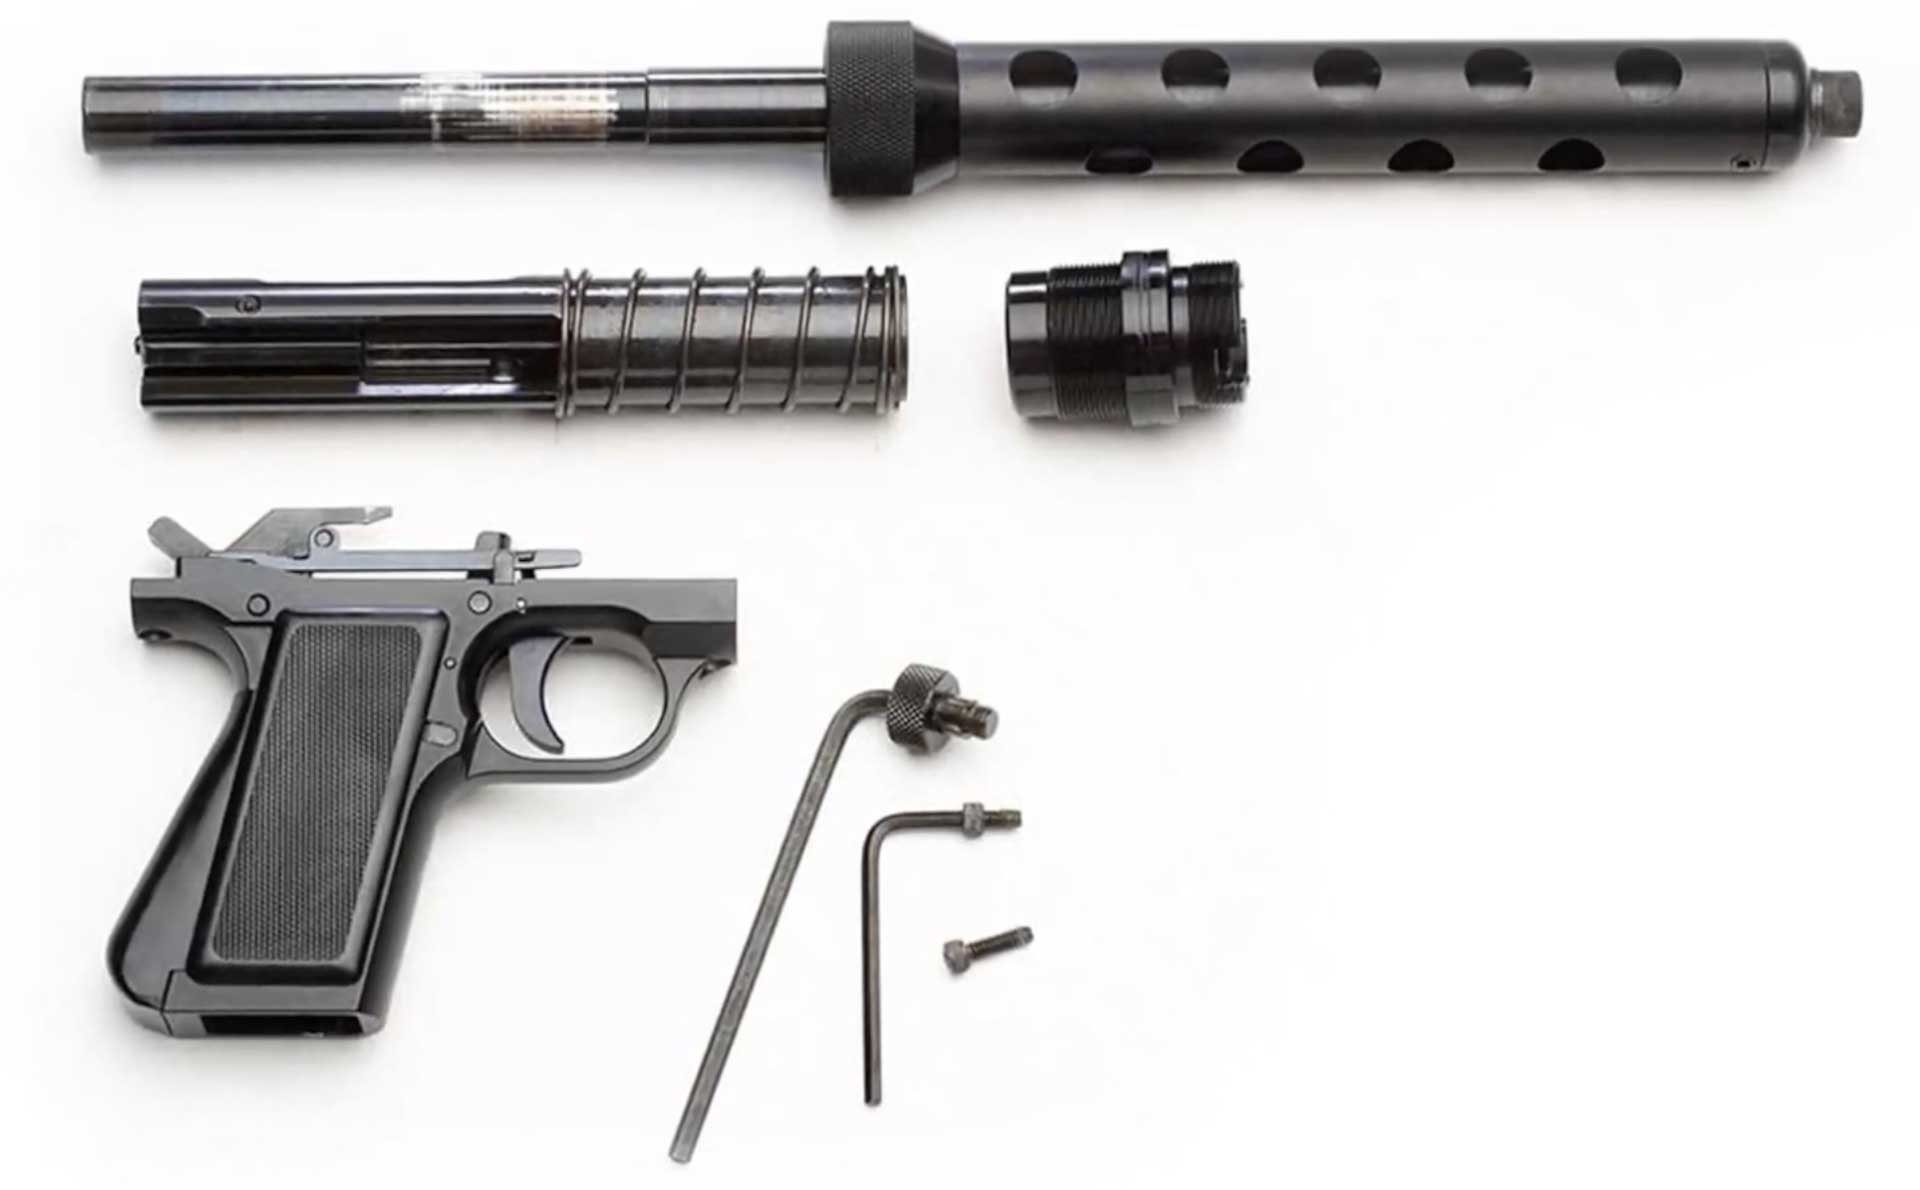 right side gun disassembled parts black steel plastic screws tools rifle